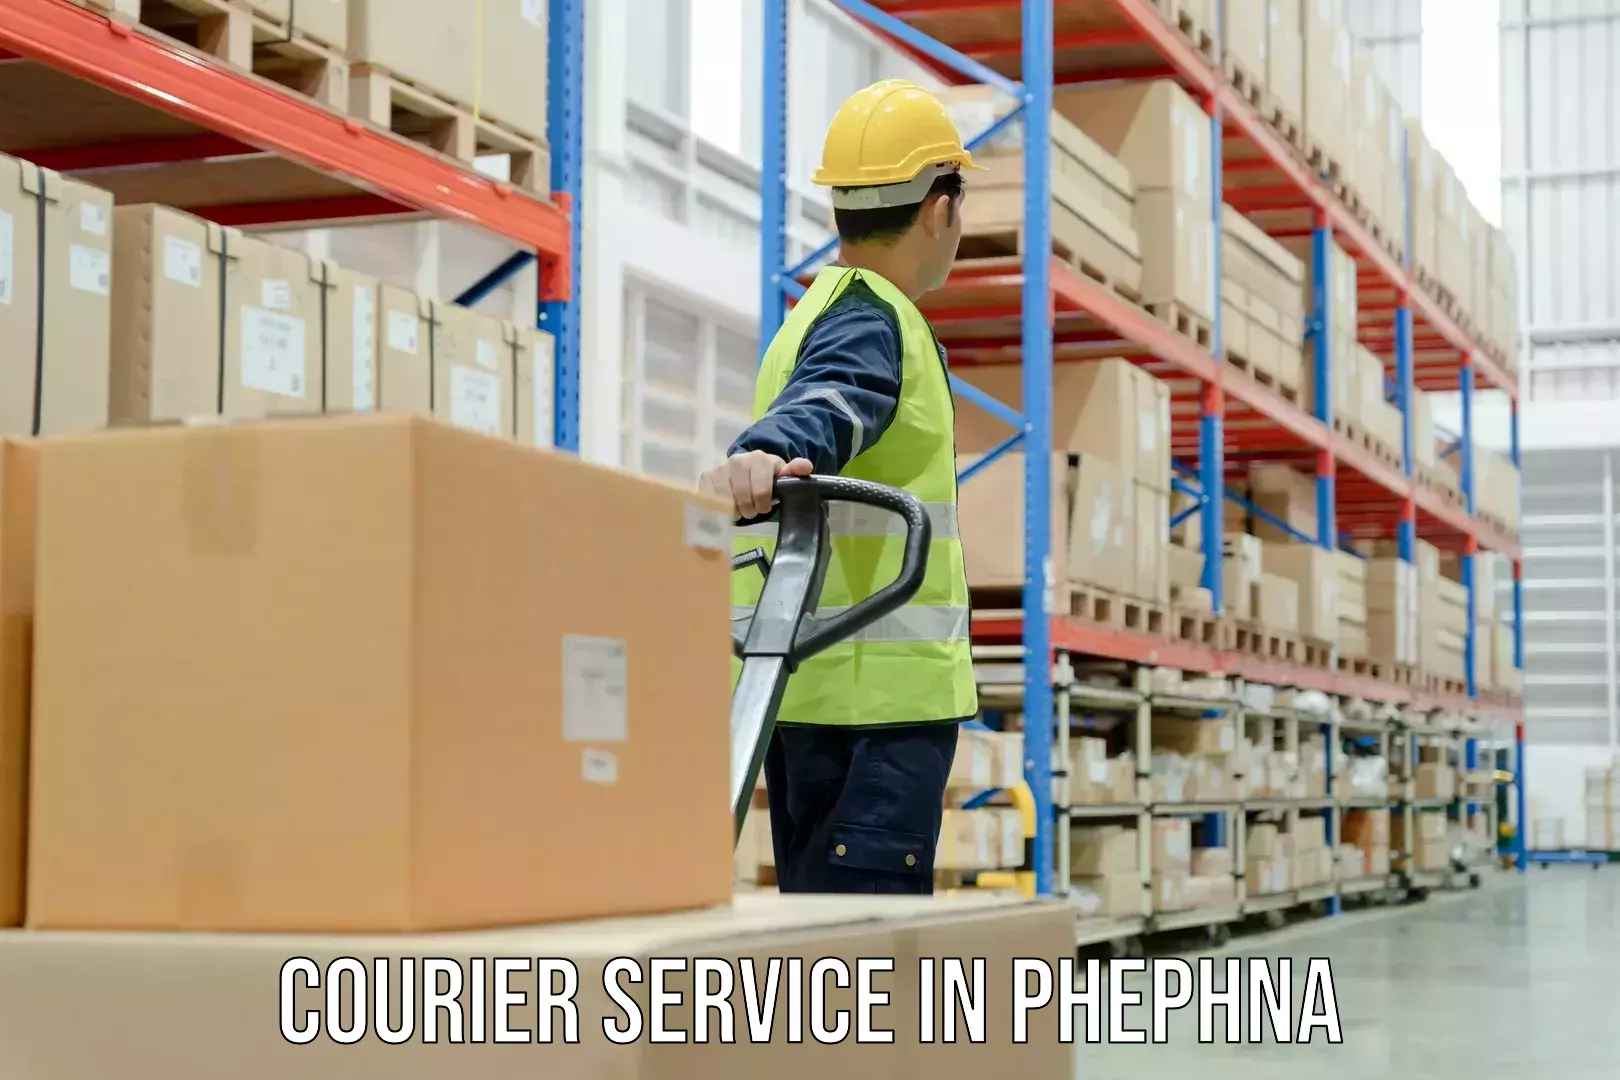 Heavy parcel delivery in Phephna